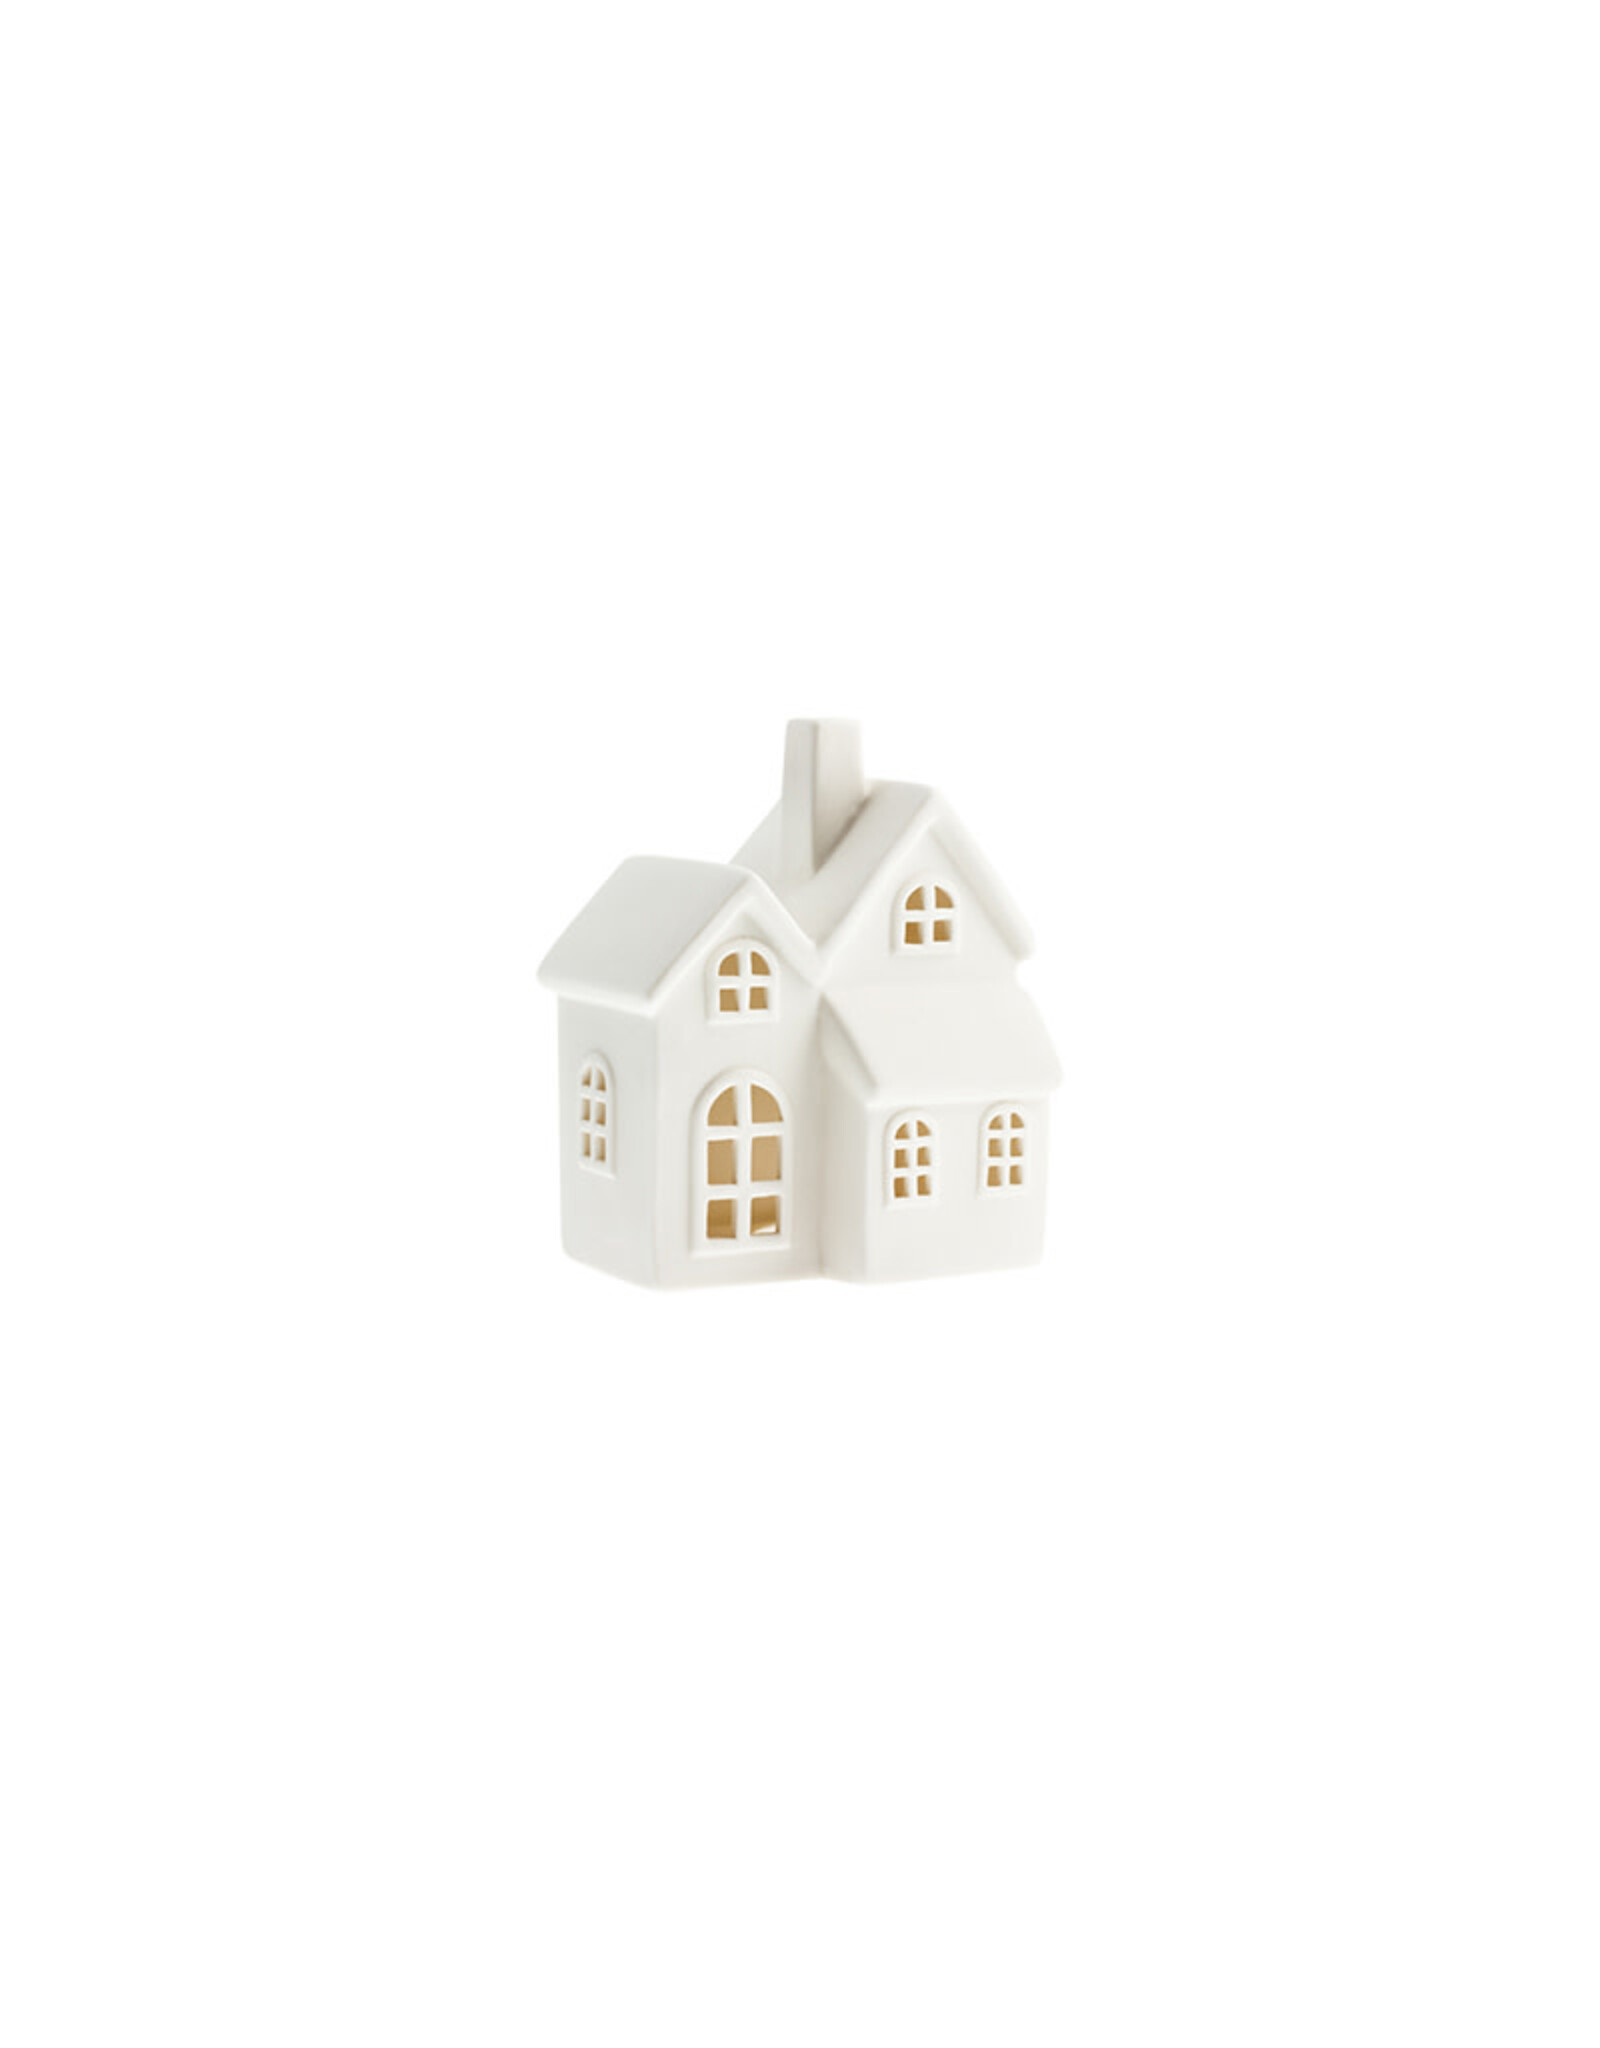 Storefactory Byn N° 6 White Ceramic House